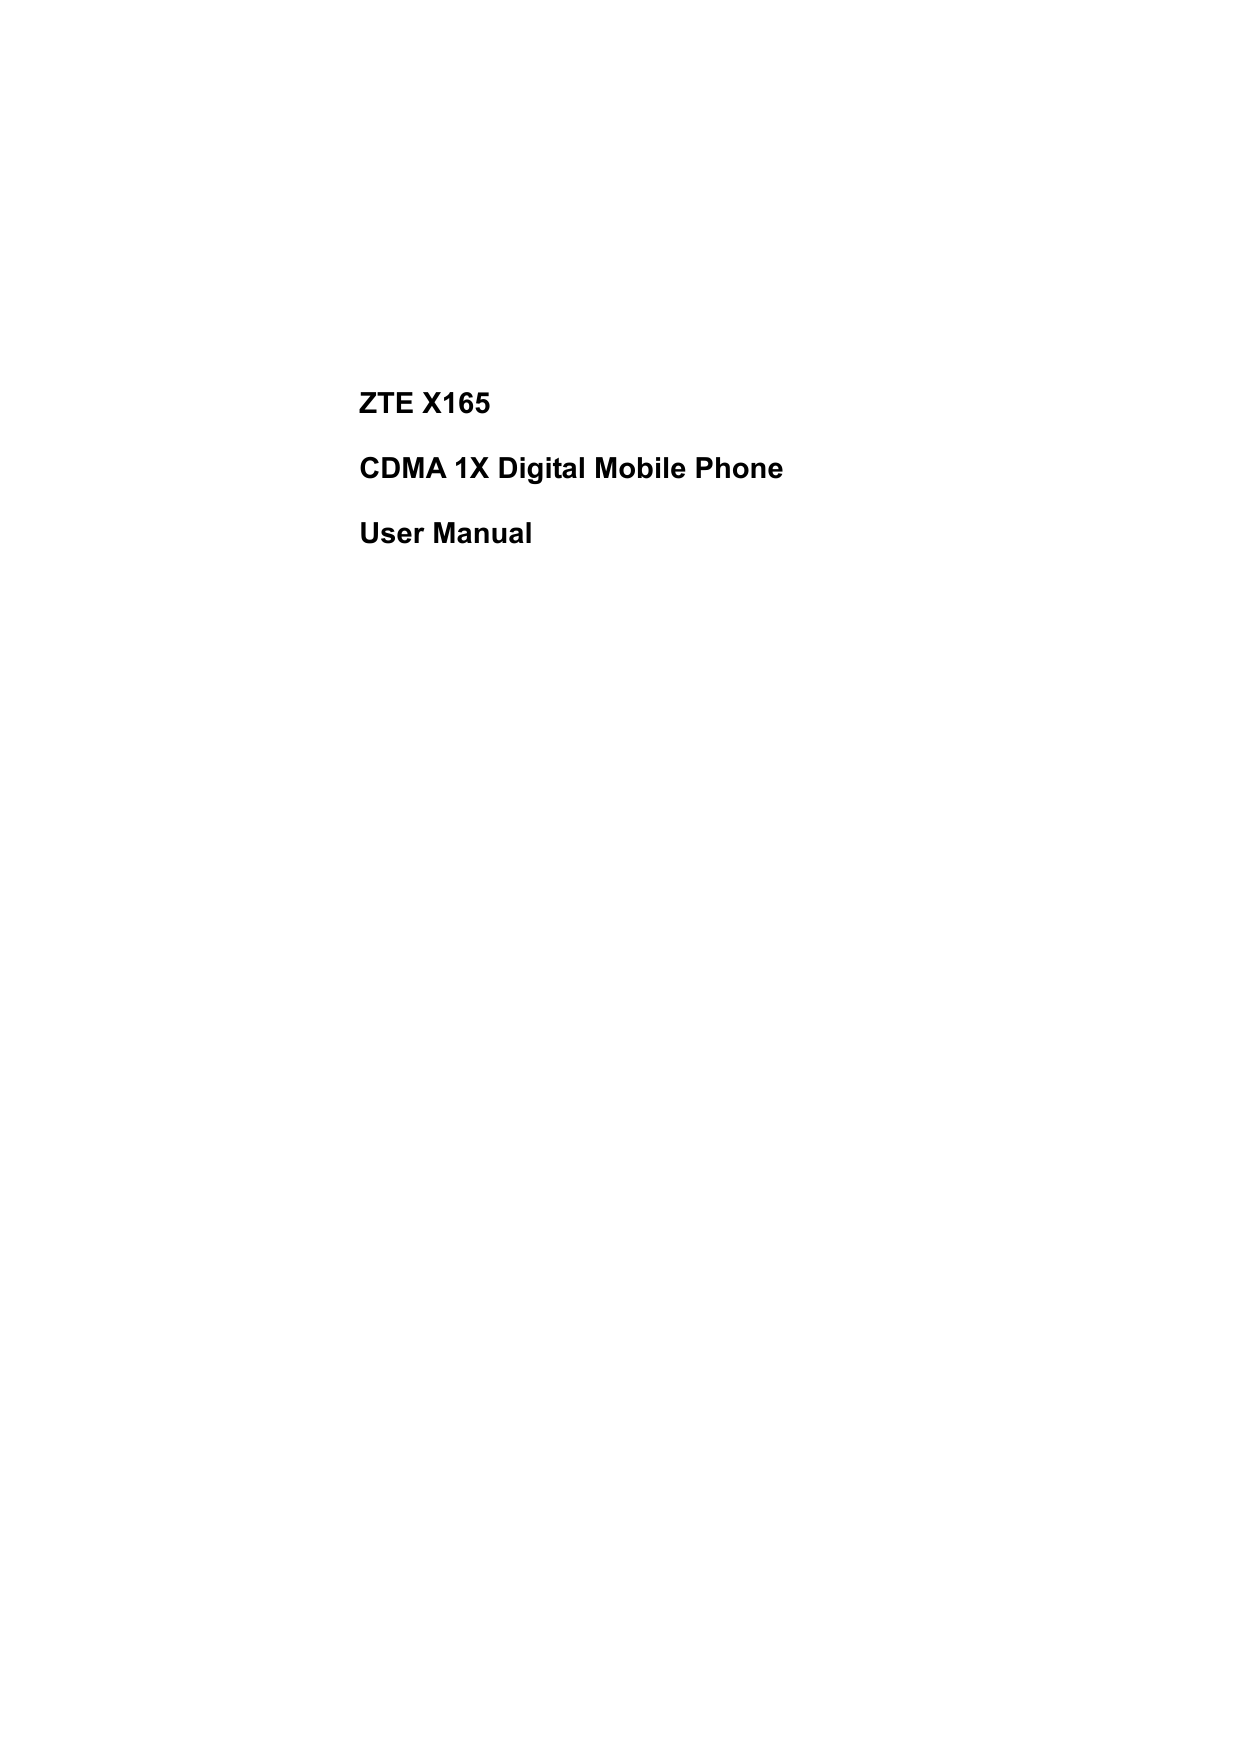      ZTE X165 CDMA 1X Digital Mobile Phone User Manual    